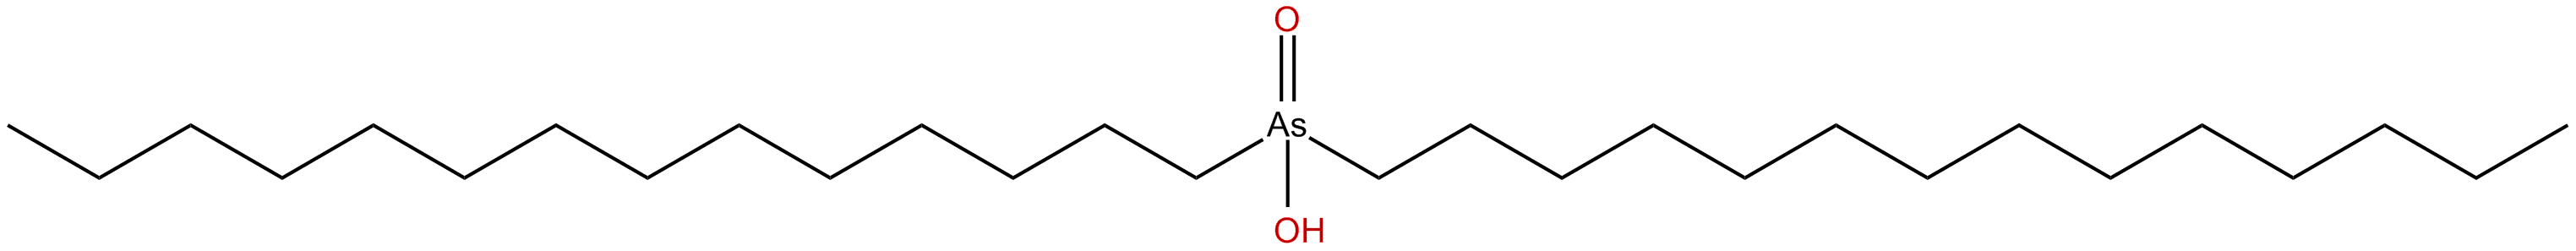 Image of hydroxyditetradecyl arsine oxide